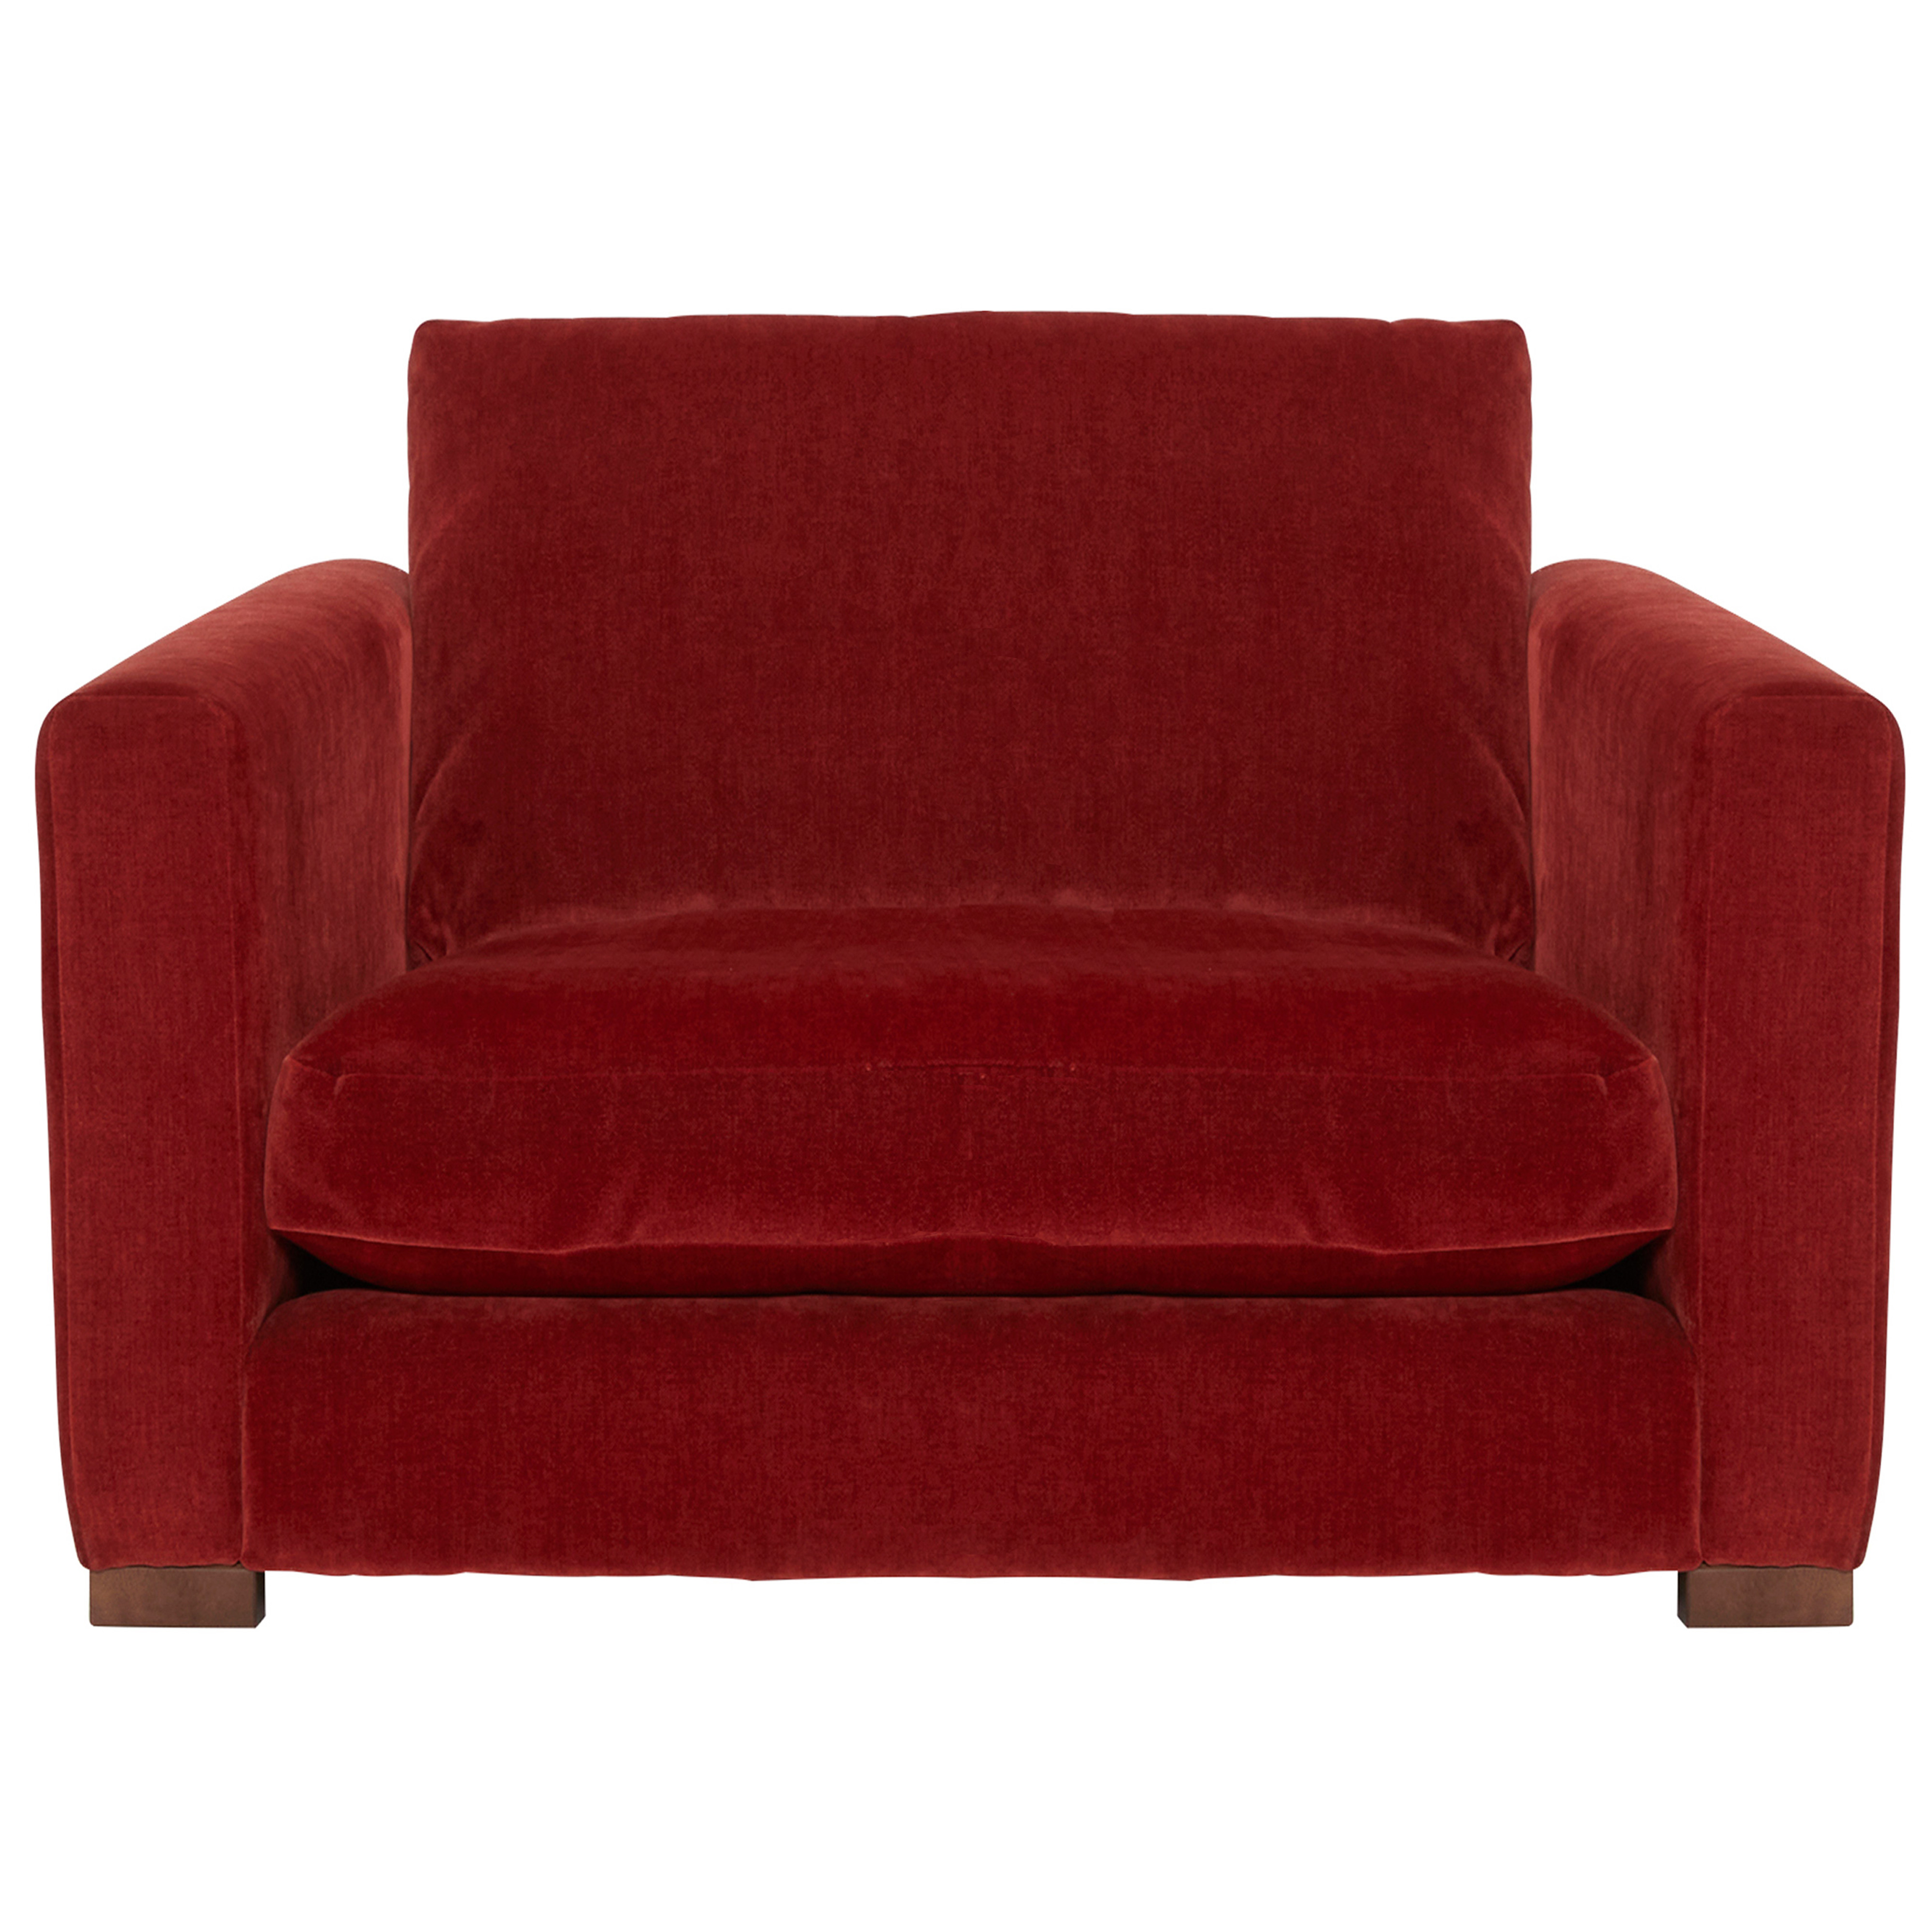 Fontella Snuggler Chair, Red Fabric | Barker & Stonehouse